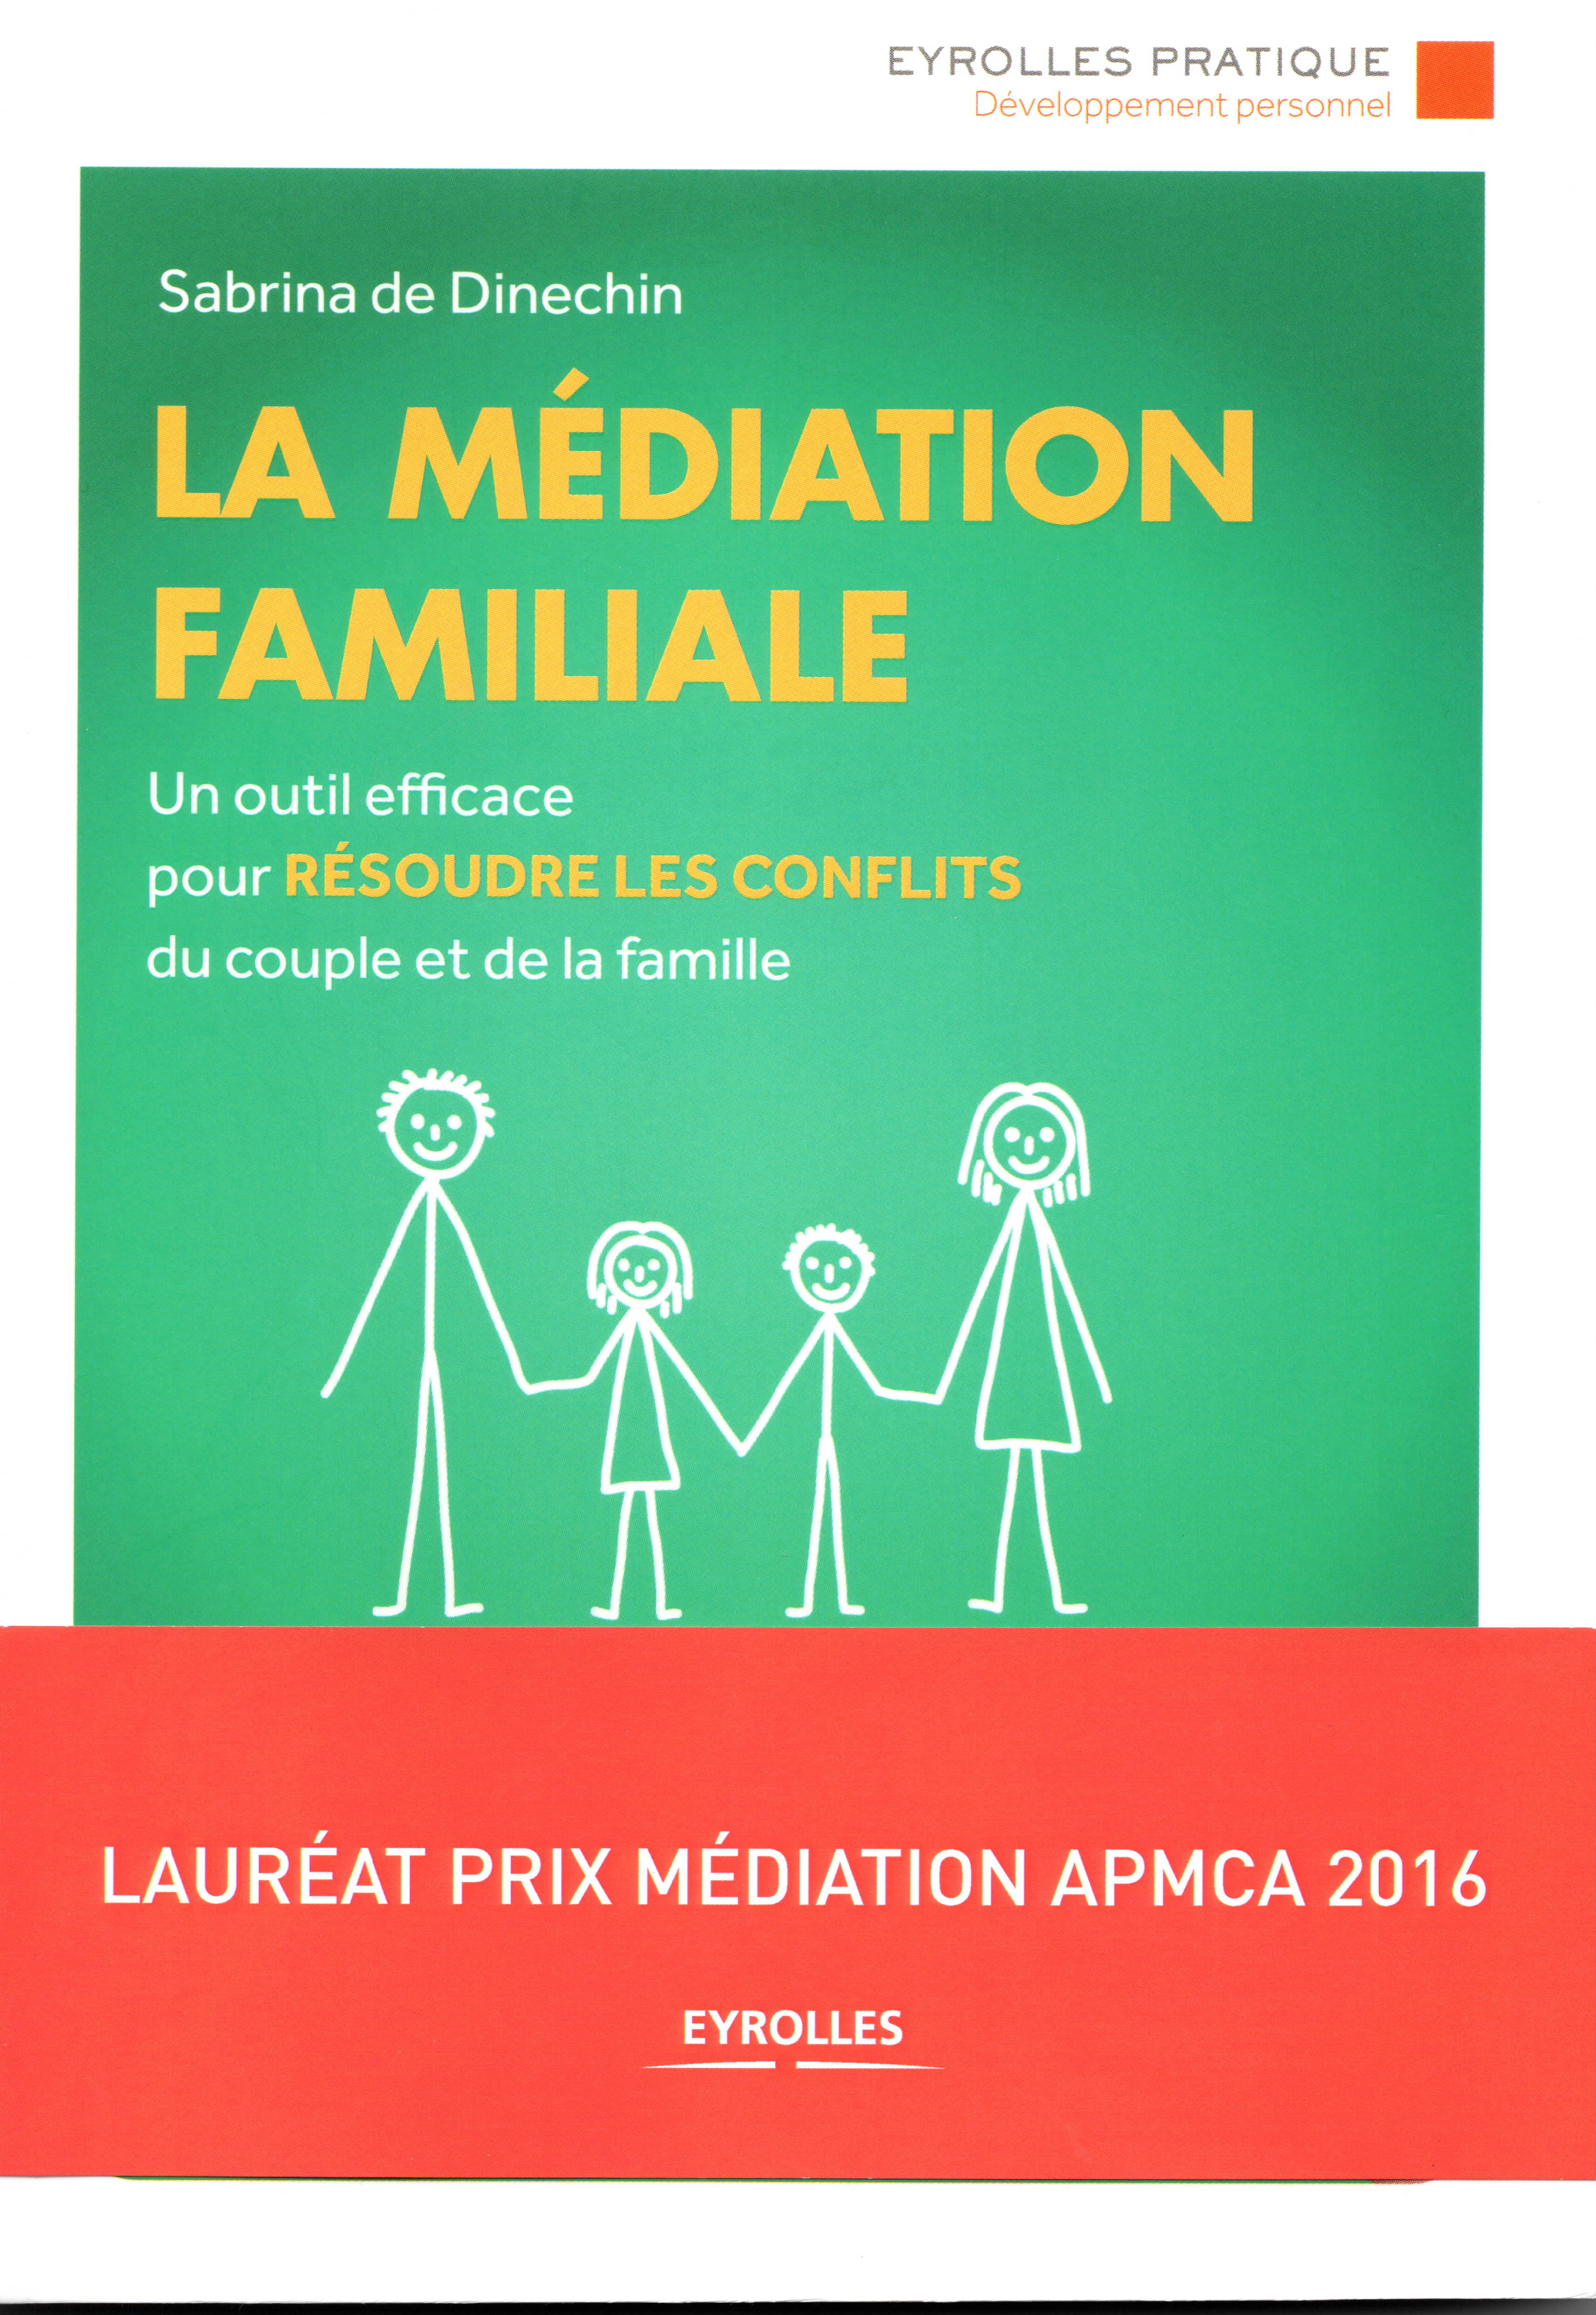 mediation familiale ouvrage de reference